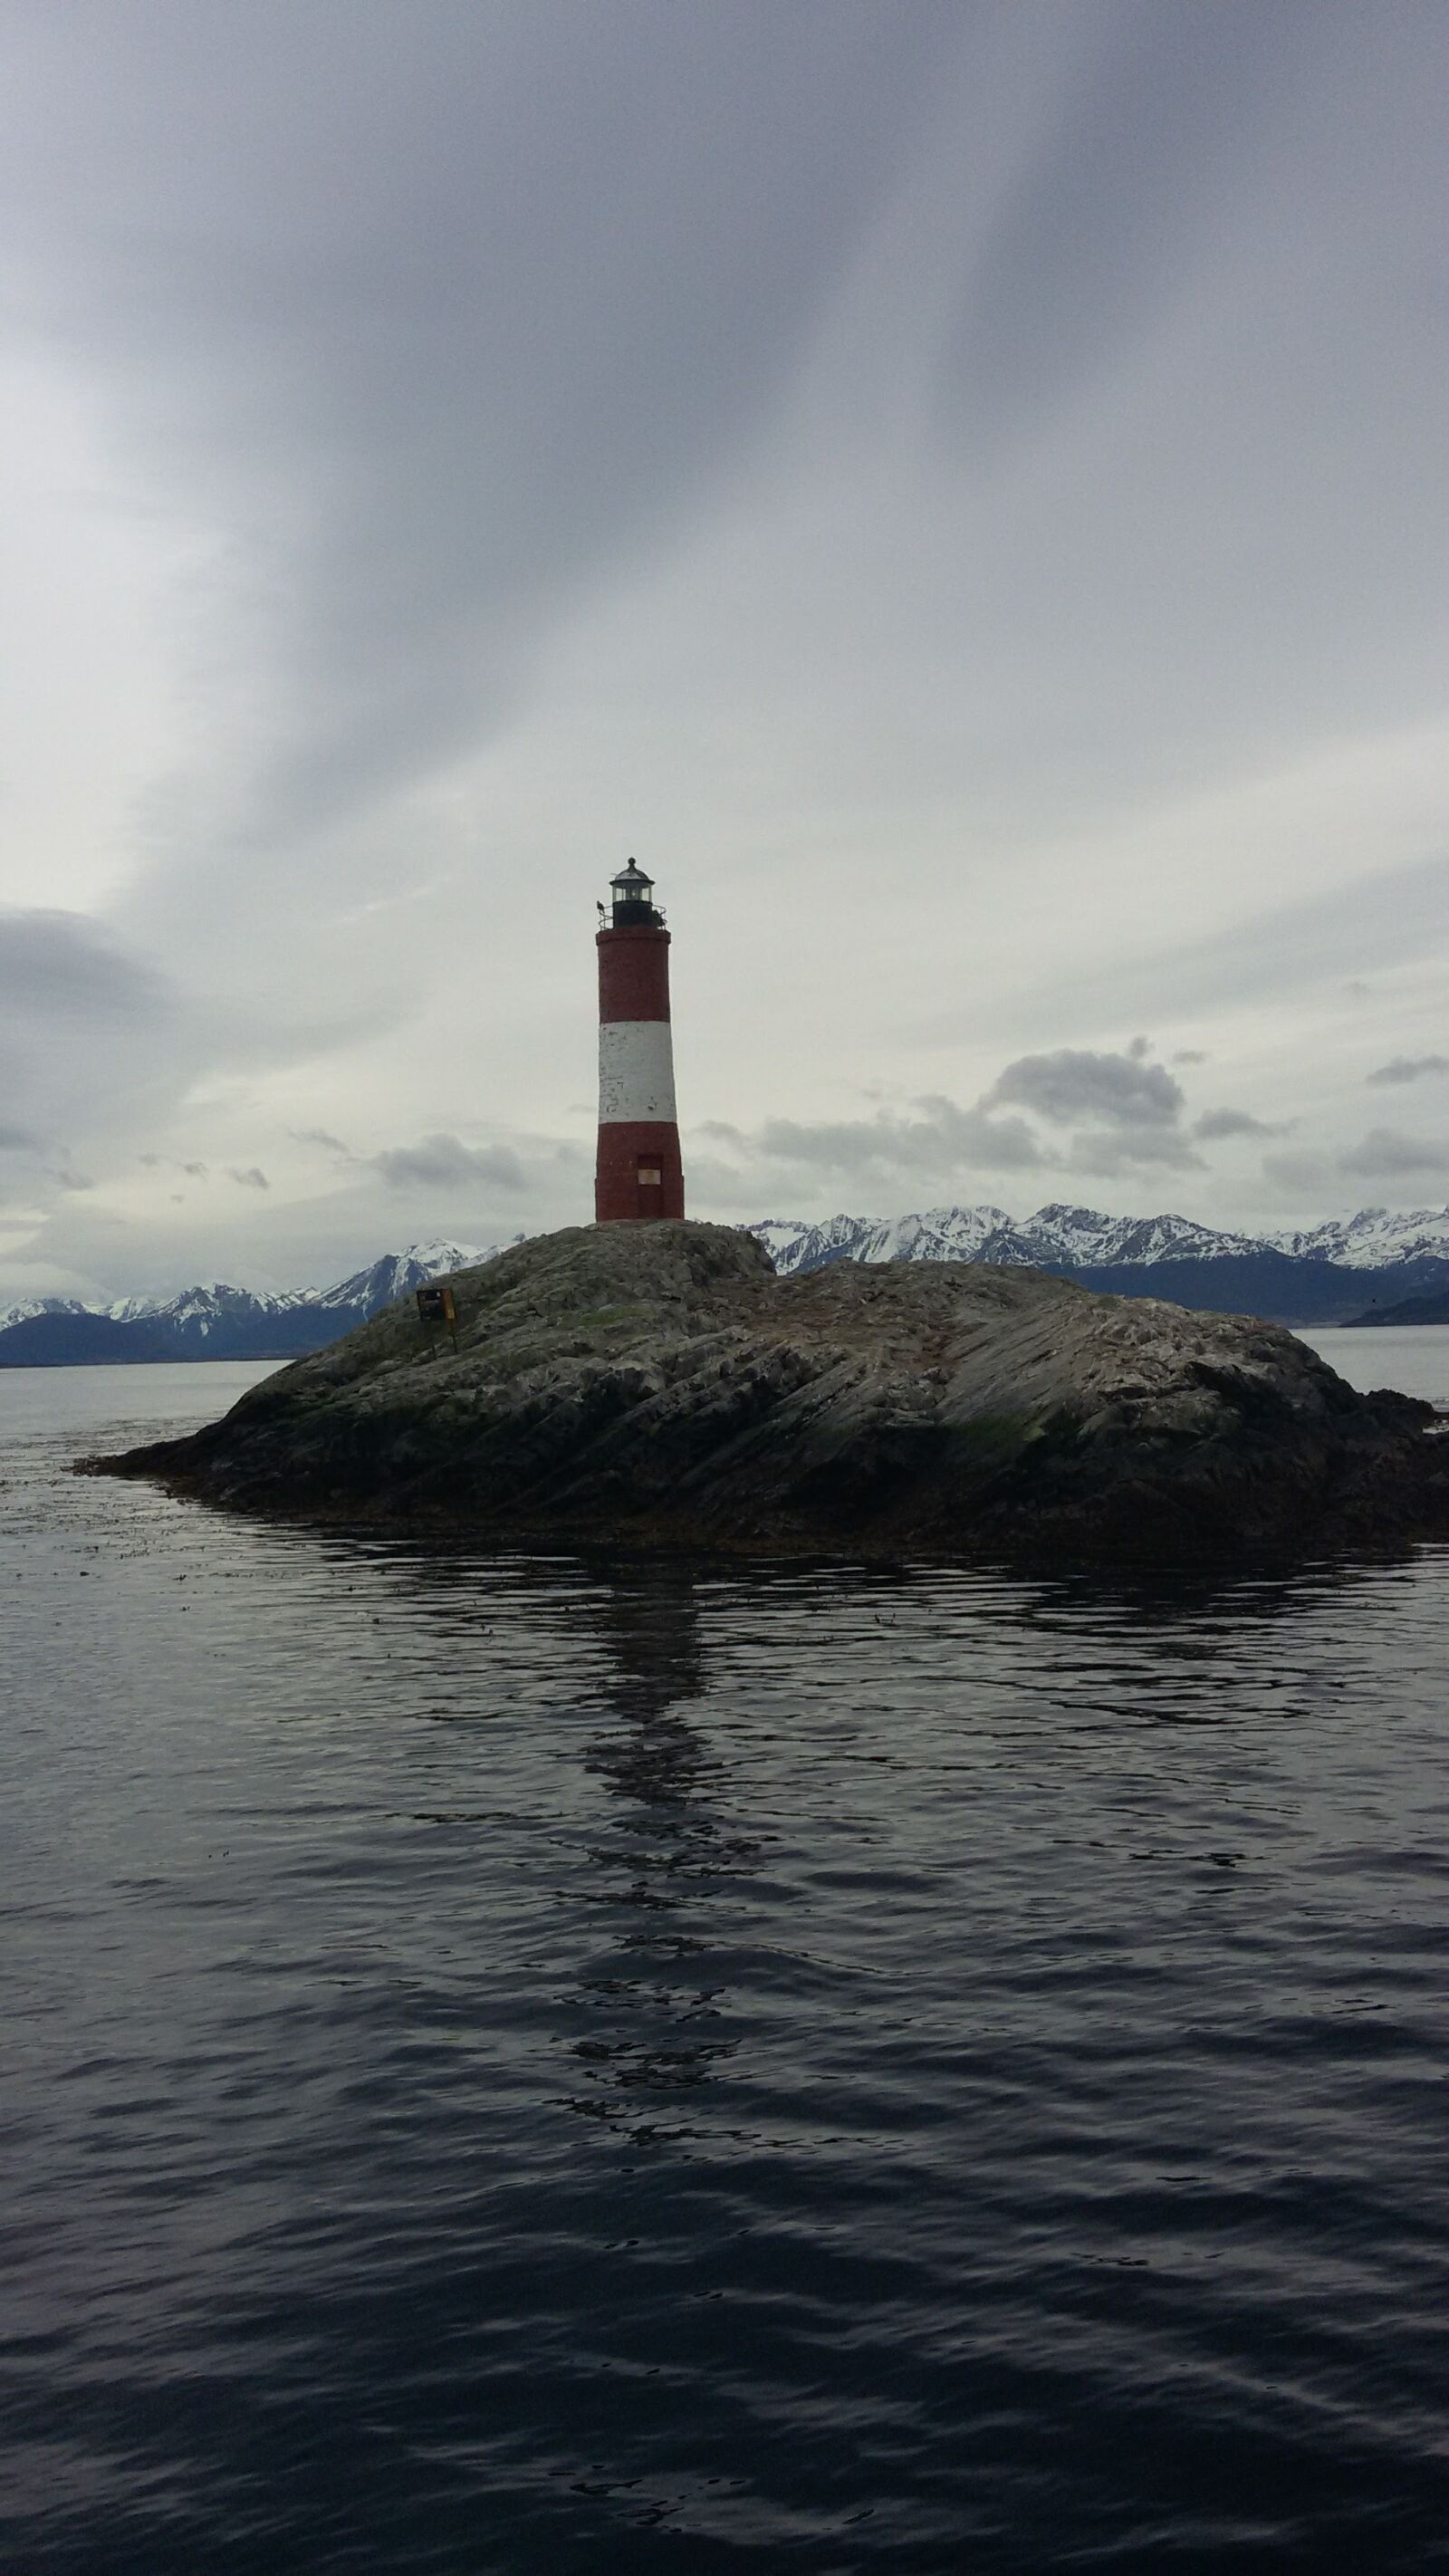 Samsung Galaxy S5 Mini sample photo. Lake, lighthouse photography